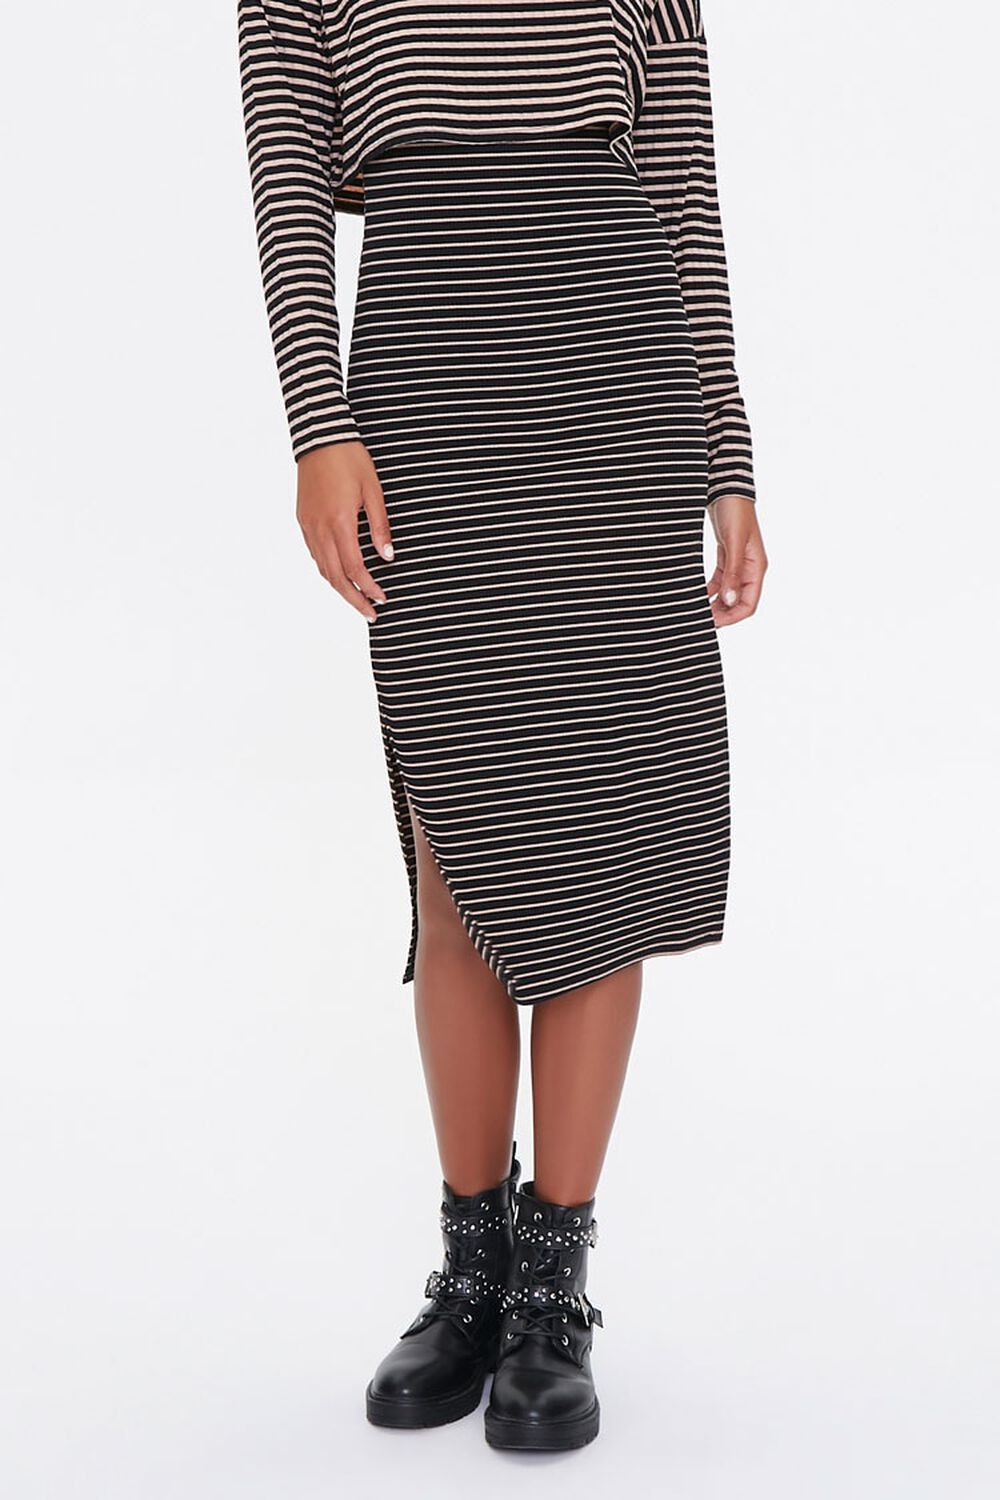 Striped Top & Skirt Set, image 3